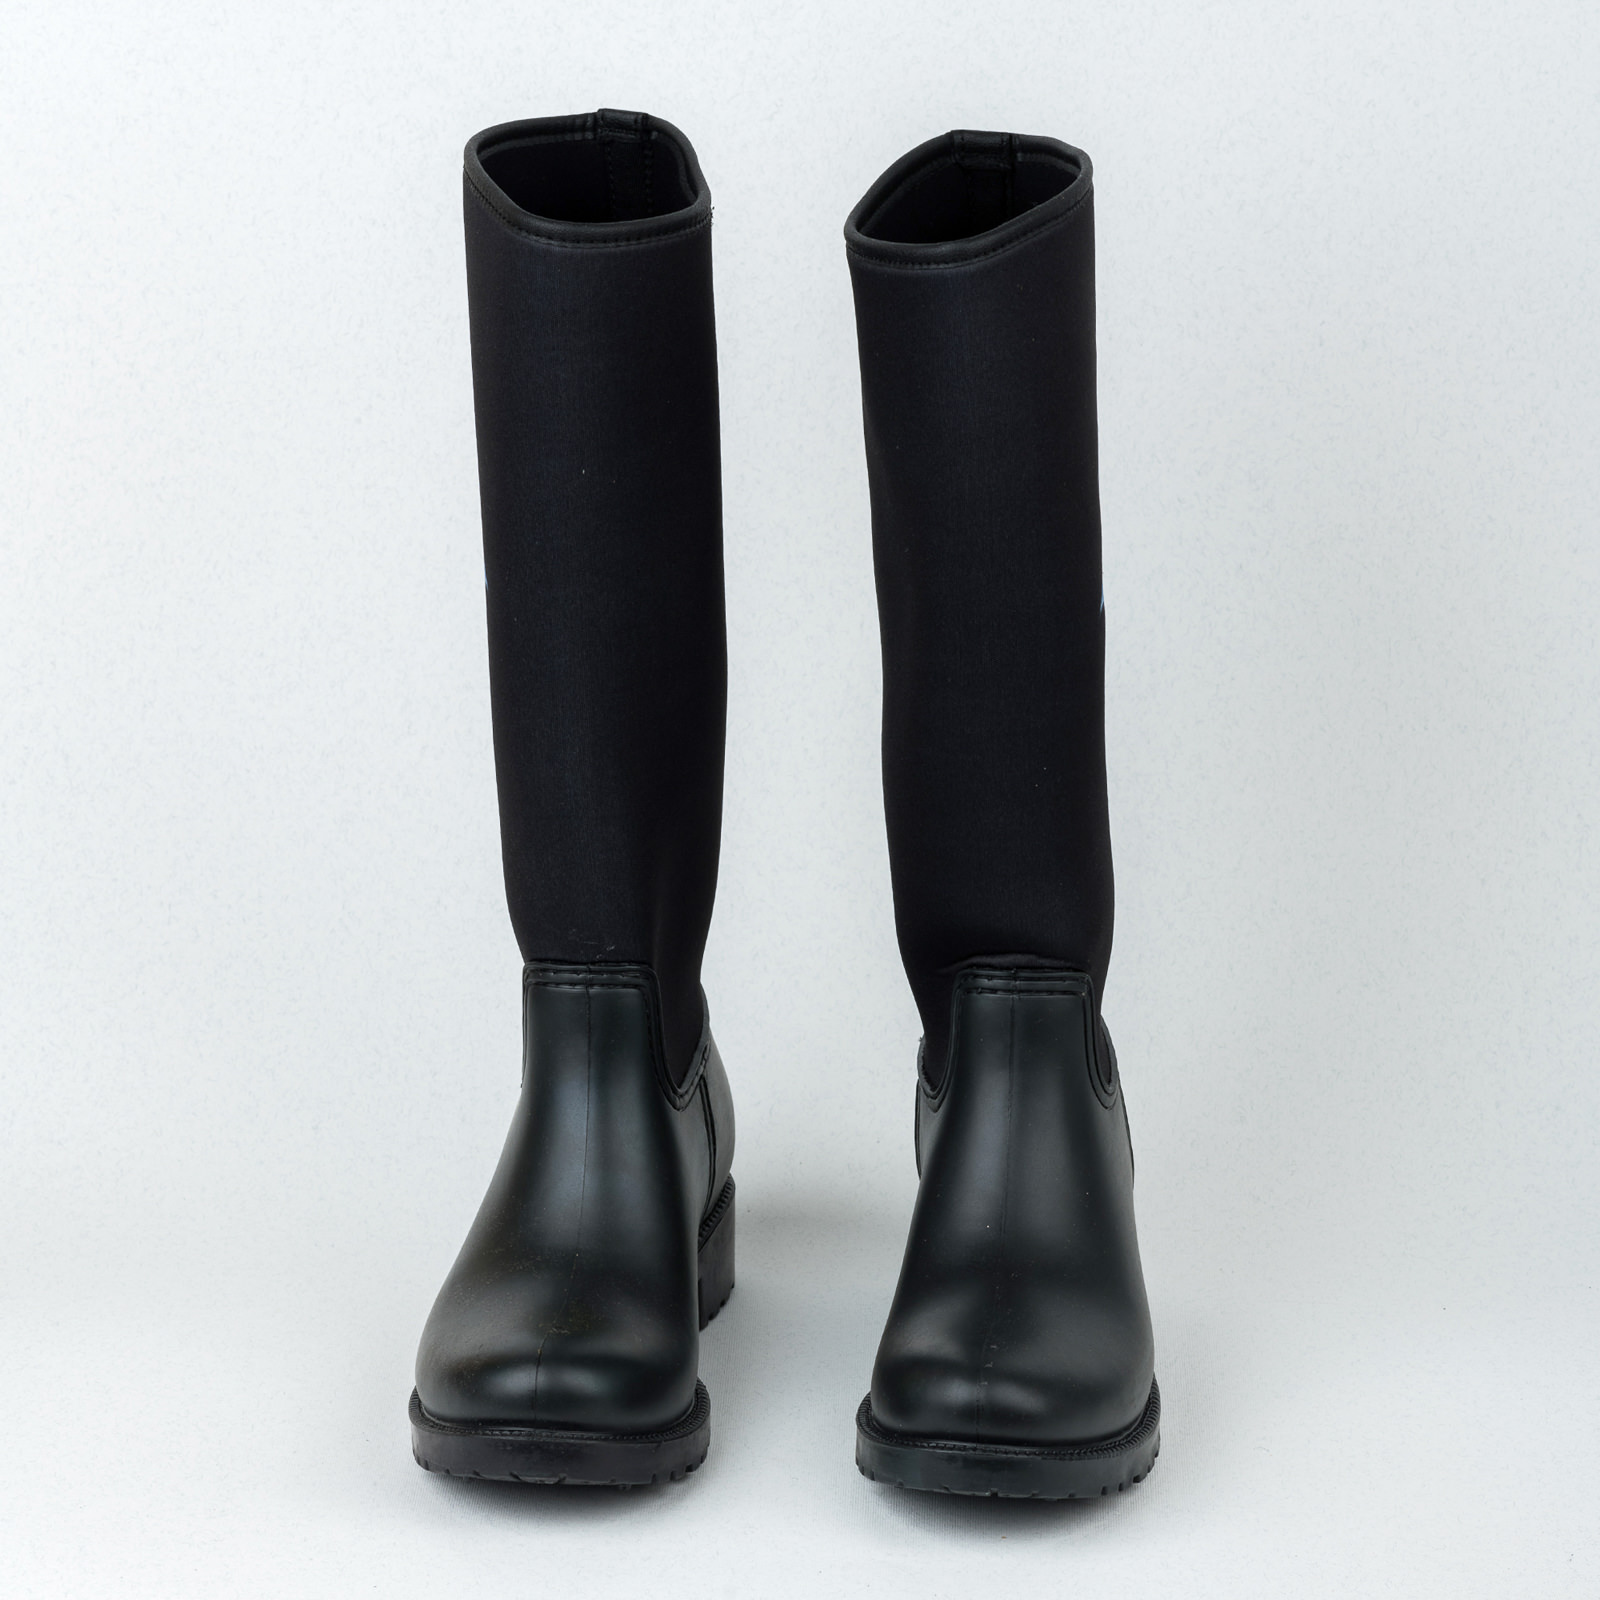 Waterproof boots B570 - BLACK